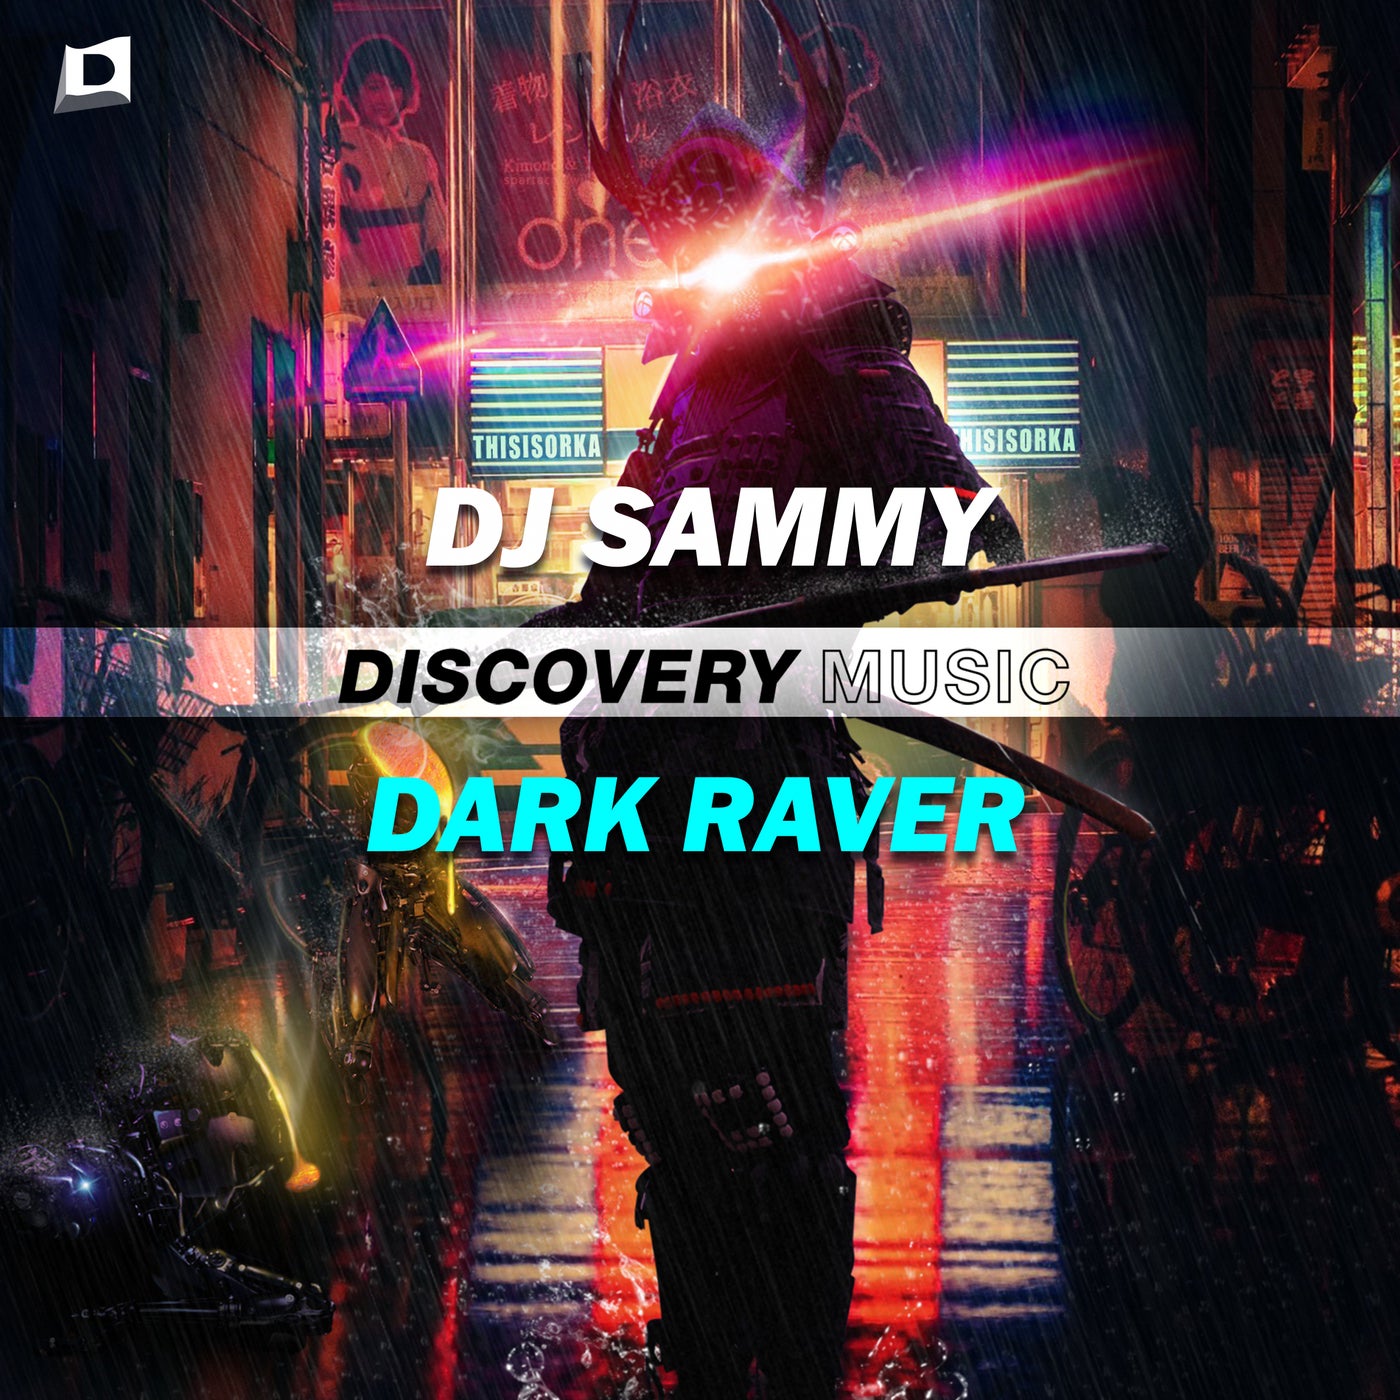 Dark rave. Saｍｍｙ Dark. Rave DJ. DJ dat. Sigma going out to the Ravers.